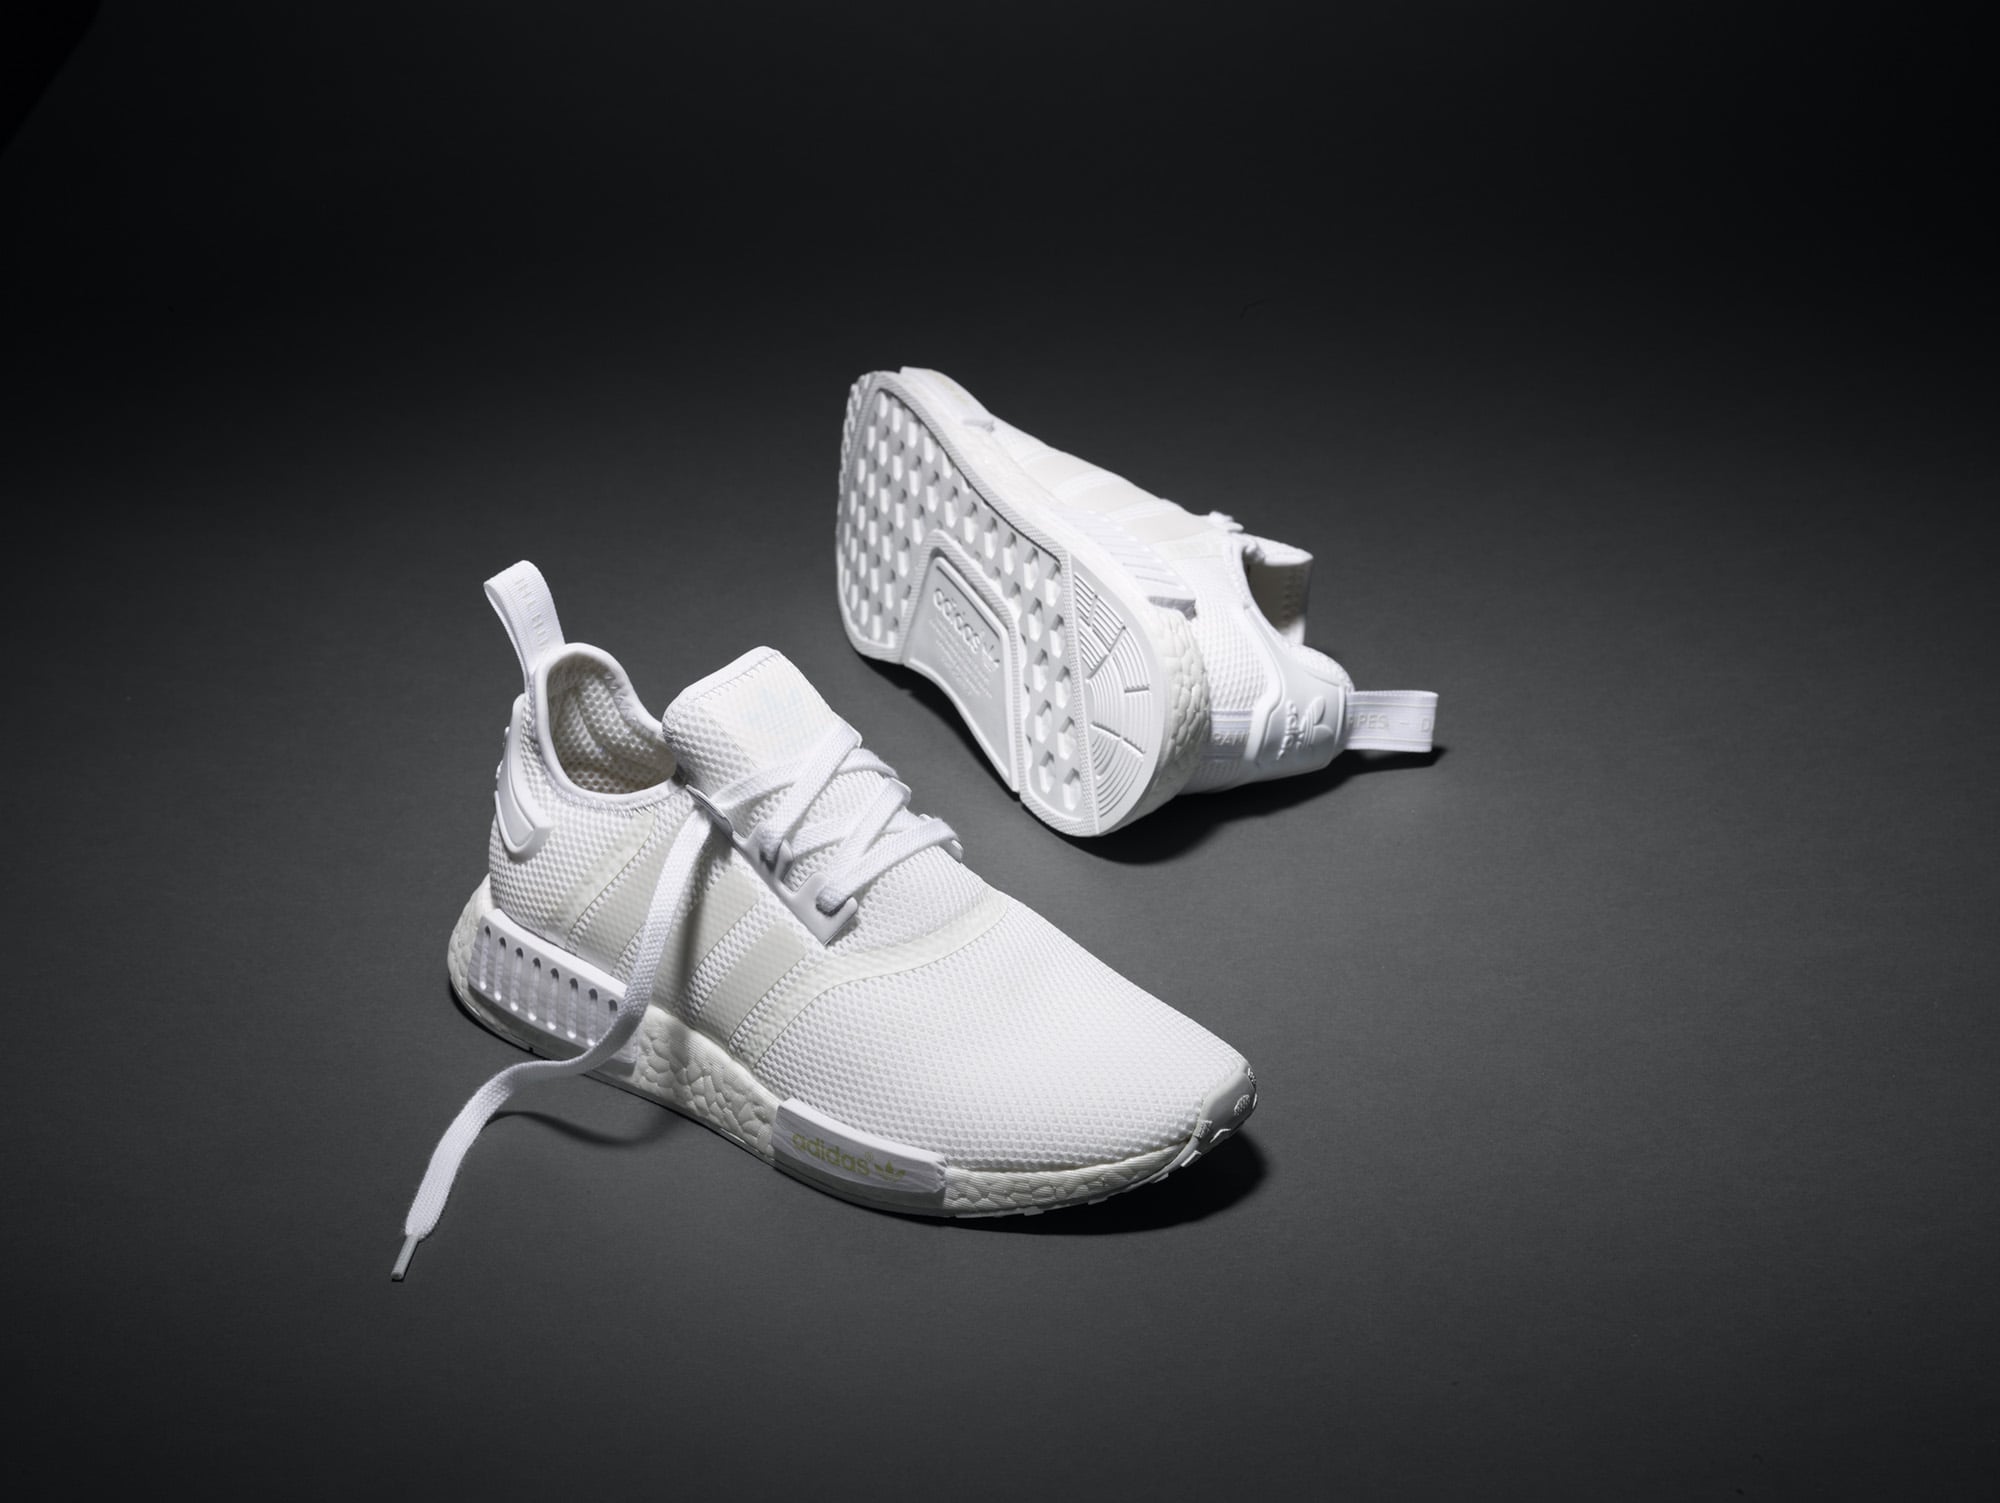 New Adidas Triple NMD Sneakers | POPSUGAR Fitness